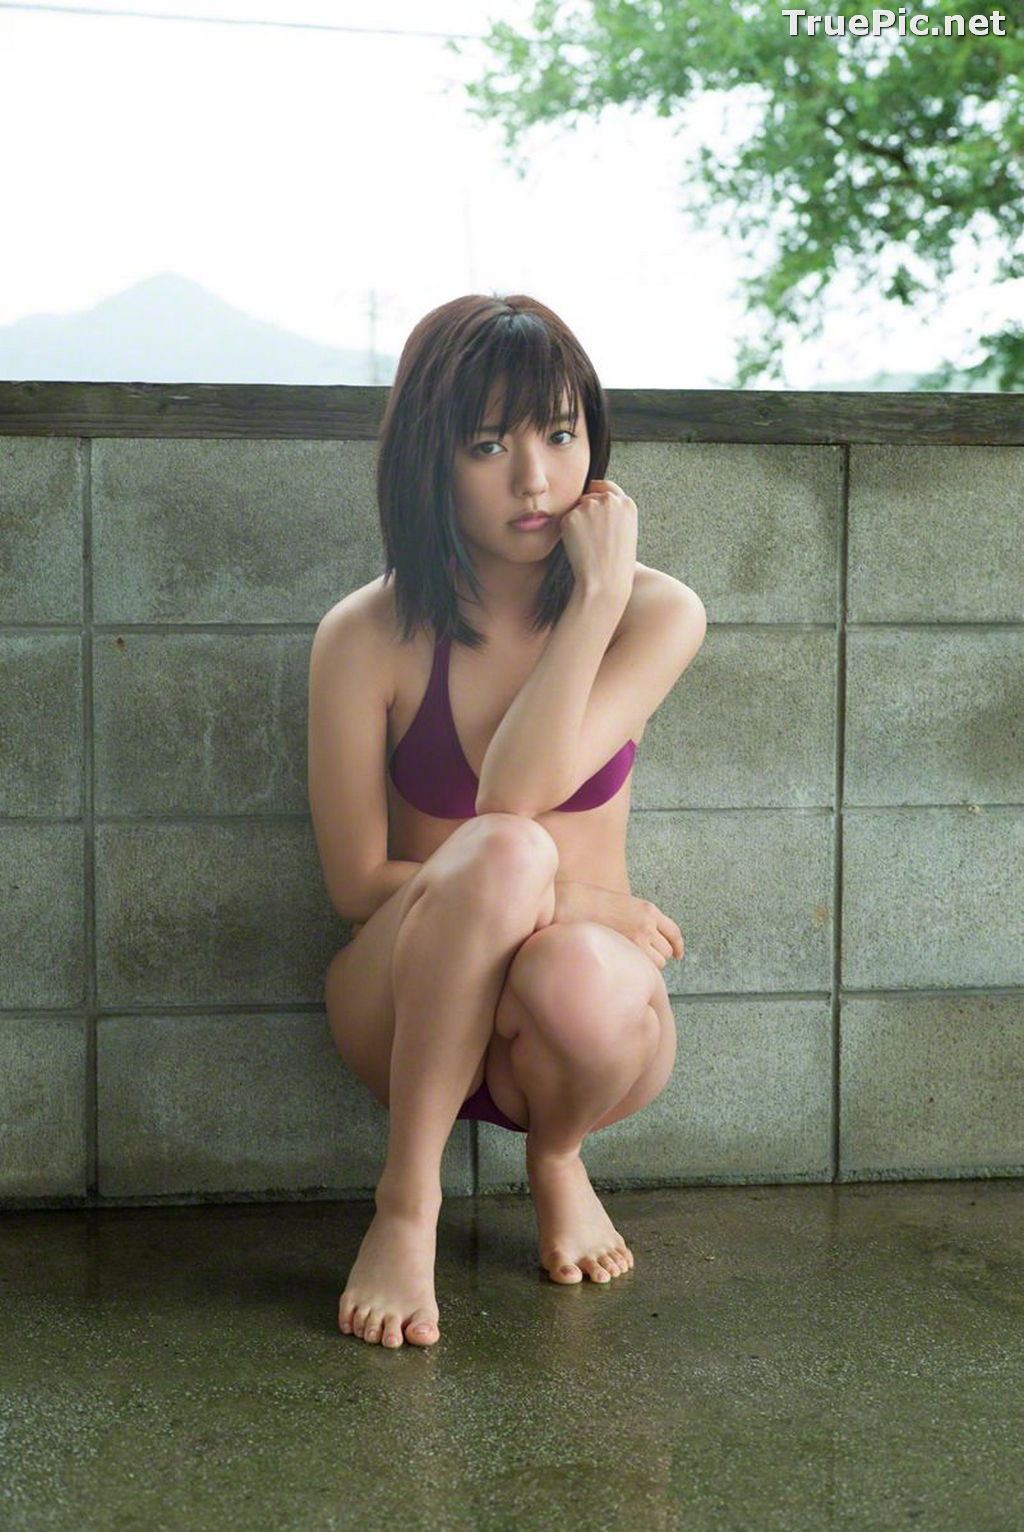 Image Wanibooks No.130 - Japanese Idol Singer and Actress - Erina Mano - TruePic.net - Picture-148